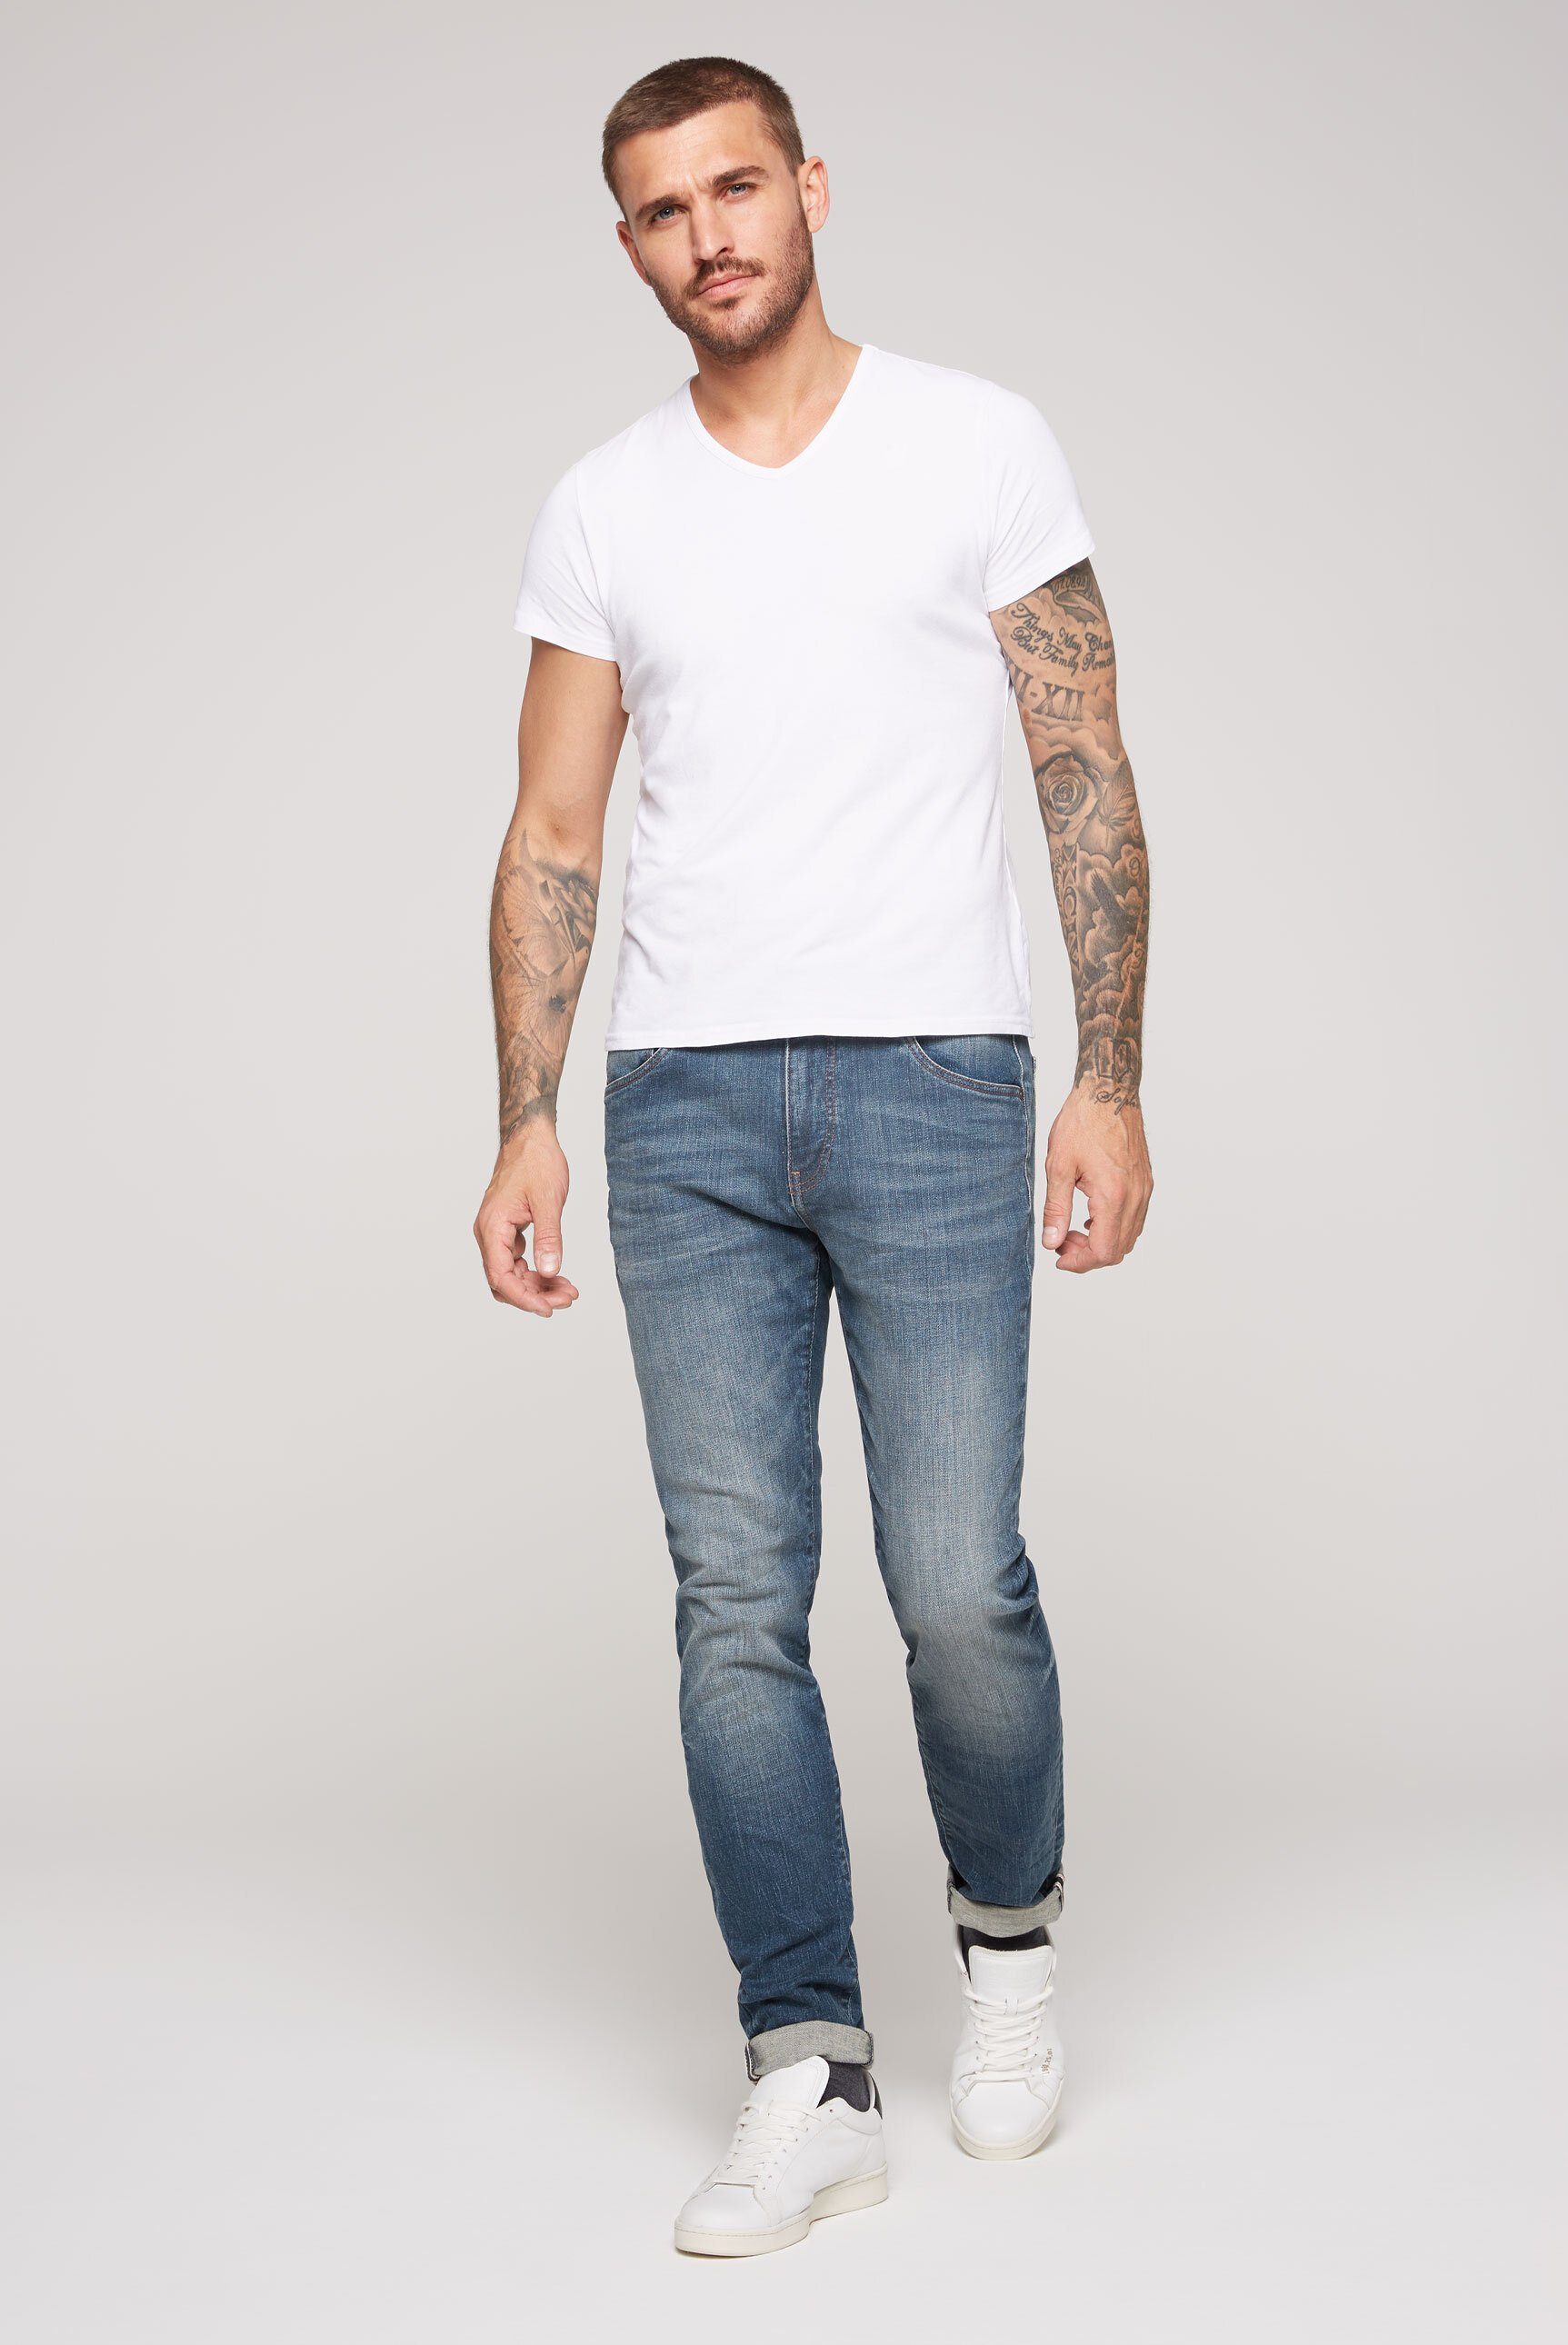 Leibhöhe CAMP hoher DAVID mit Regular-fit-Jeans